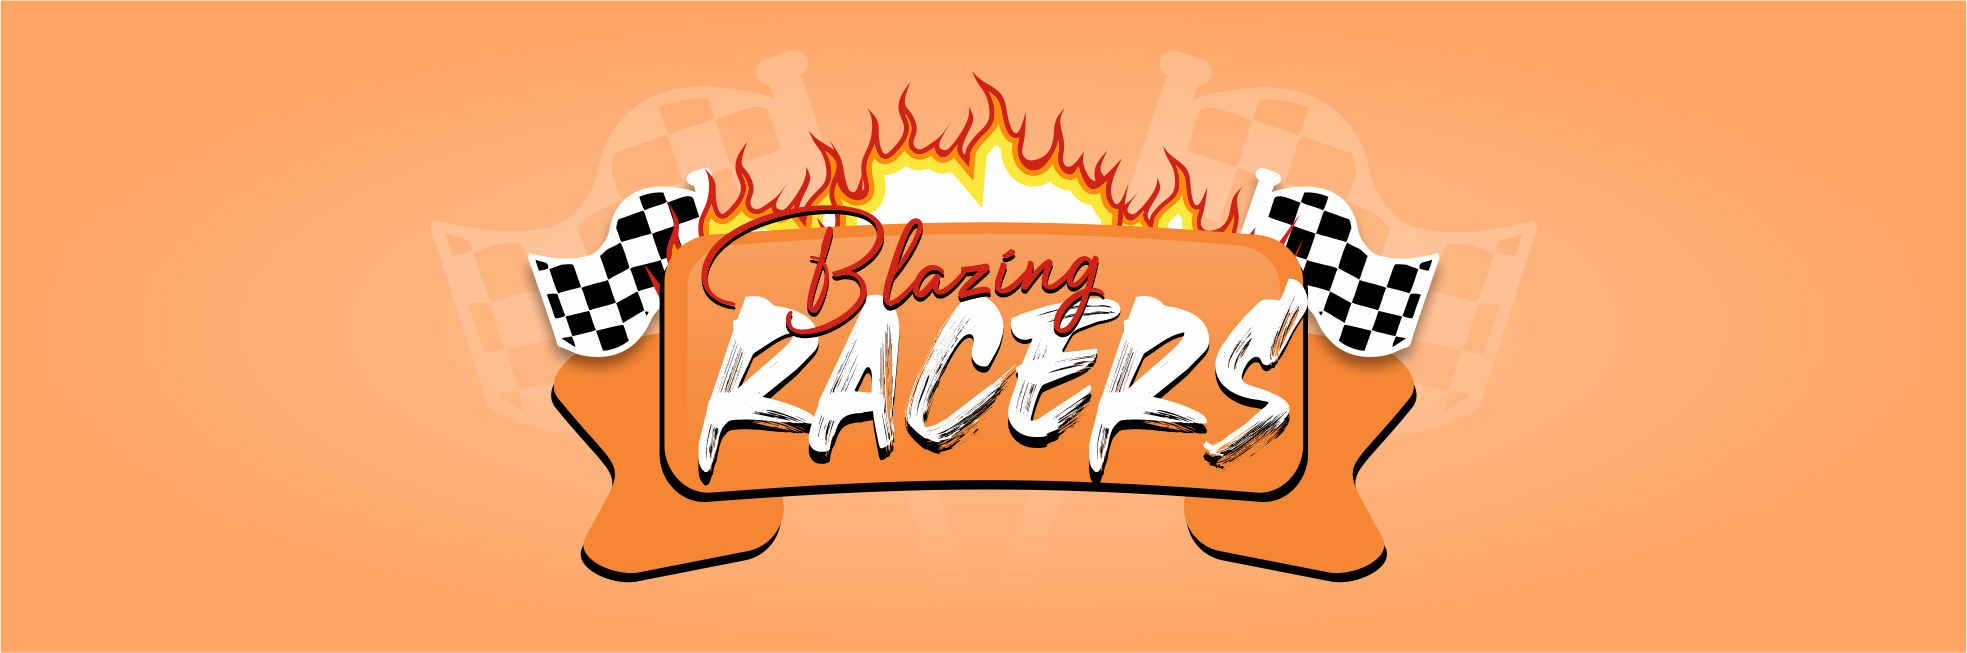 Blazing Racers